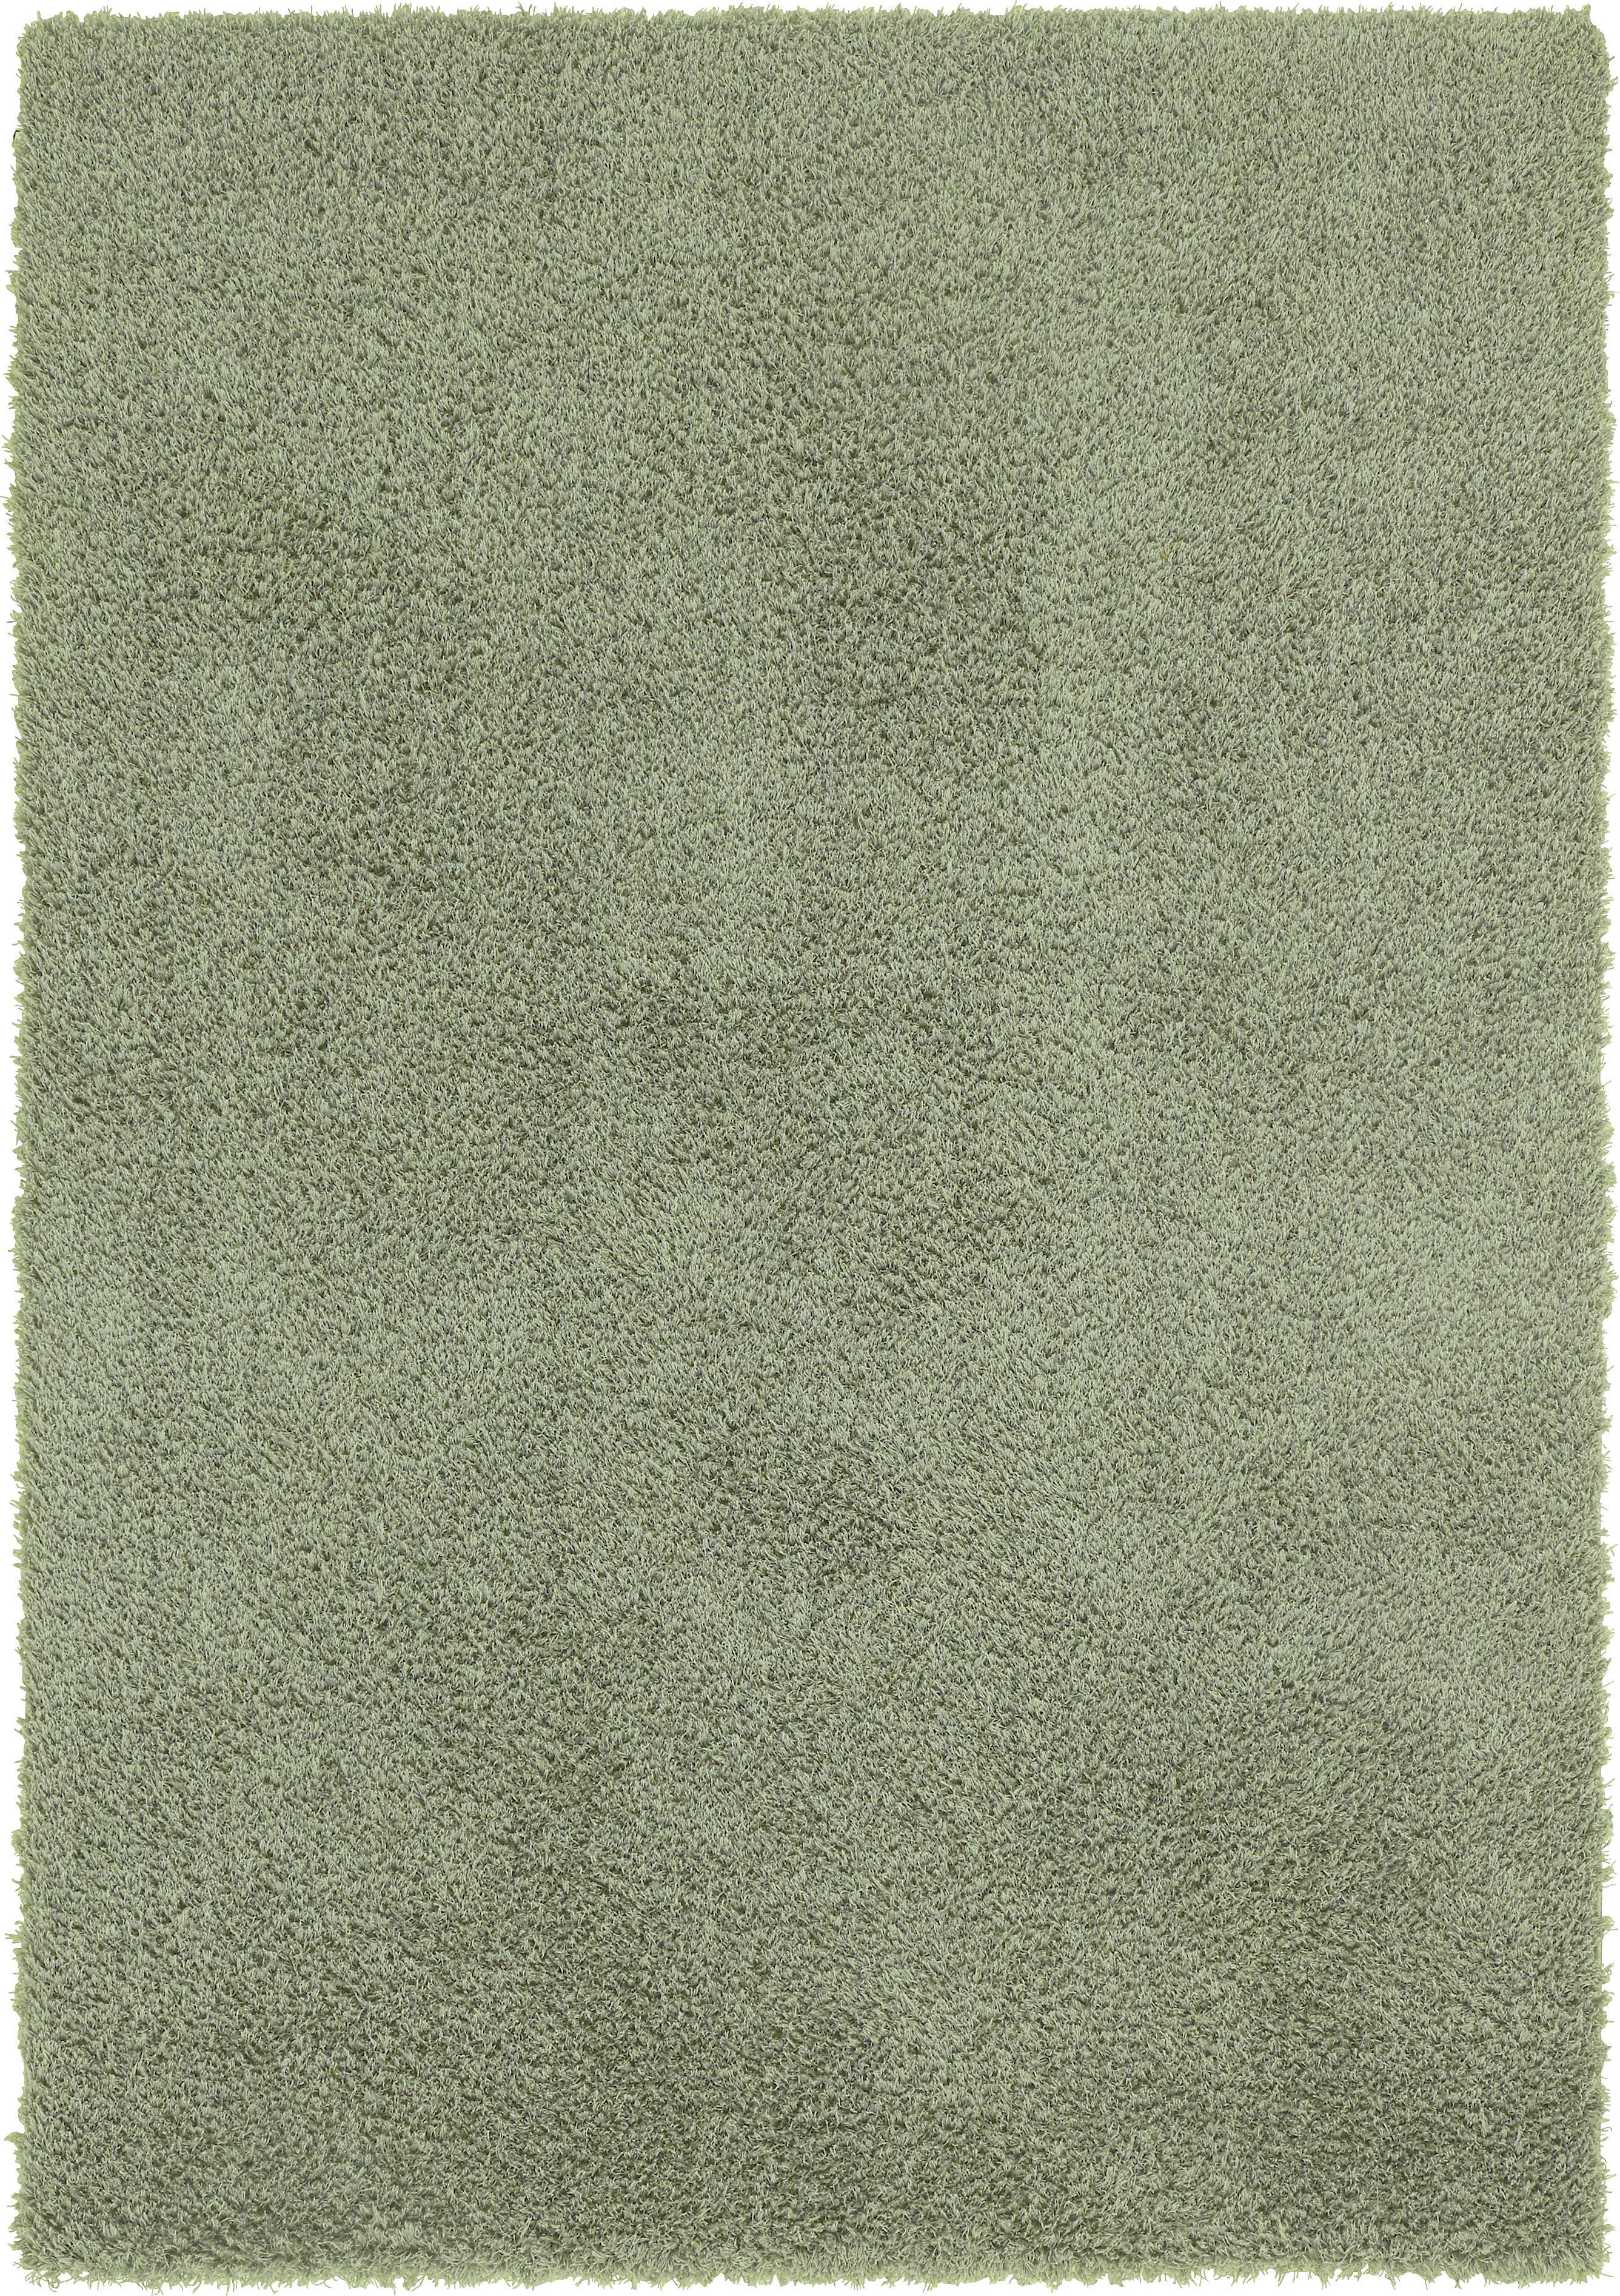 Koberec Stefan 2, 120/170cm, Zelená - zelená, Moderný, textil (120/170cm) - Modern Living